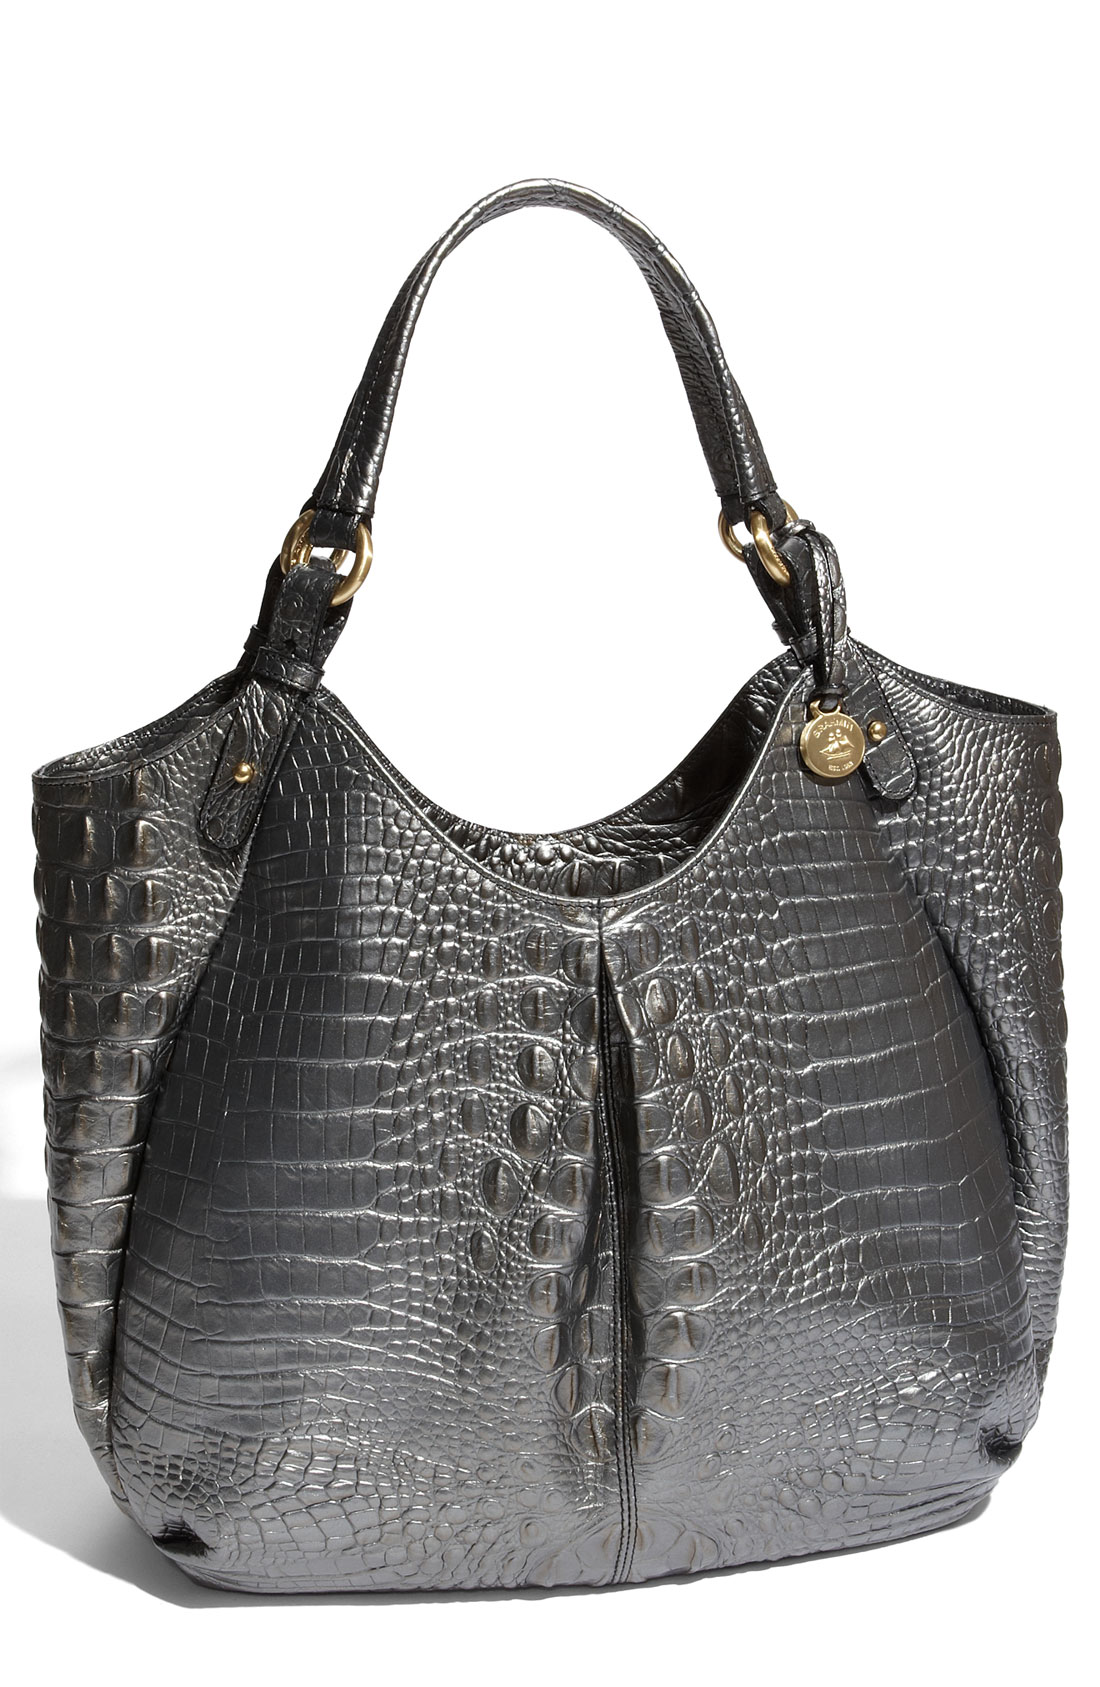 Brahmin Melbourne Anita Croc Embossed Leather Hobo in Silver (pewter